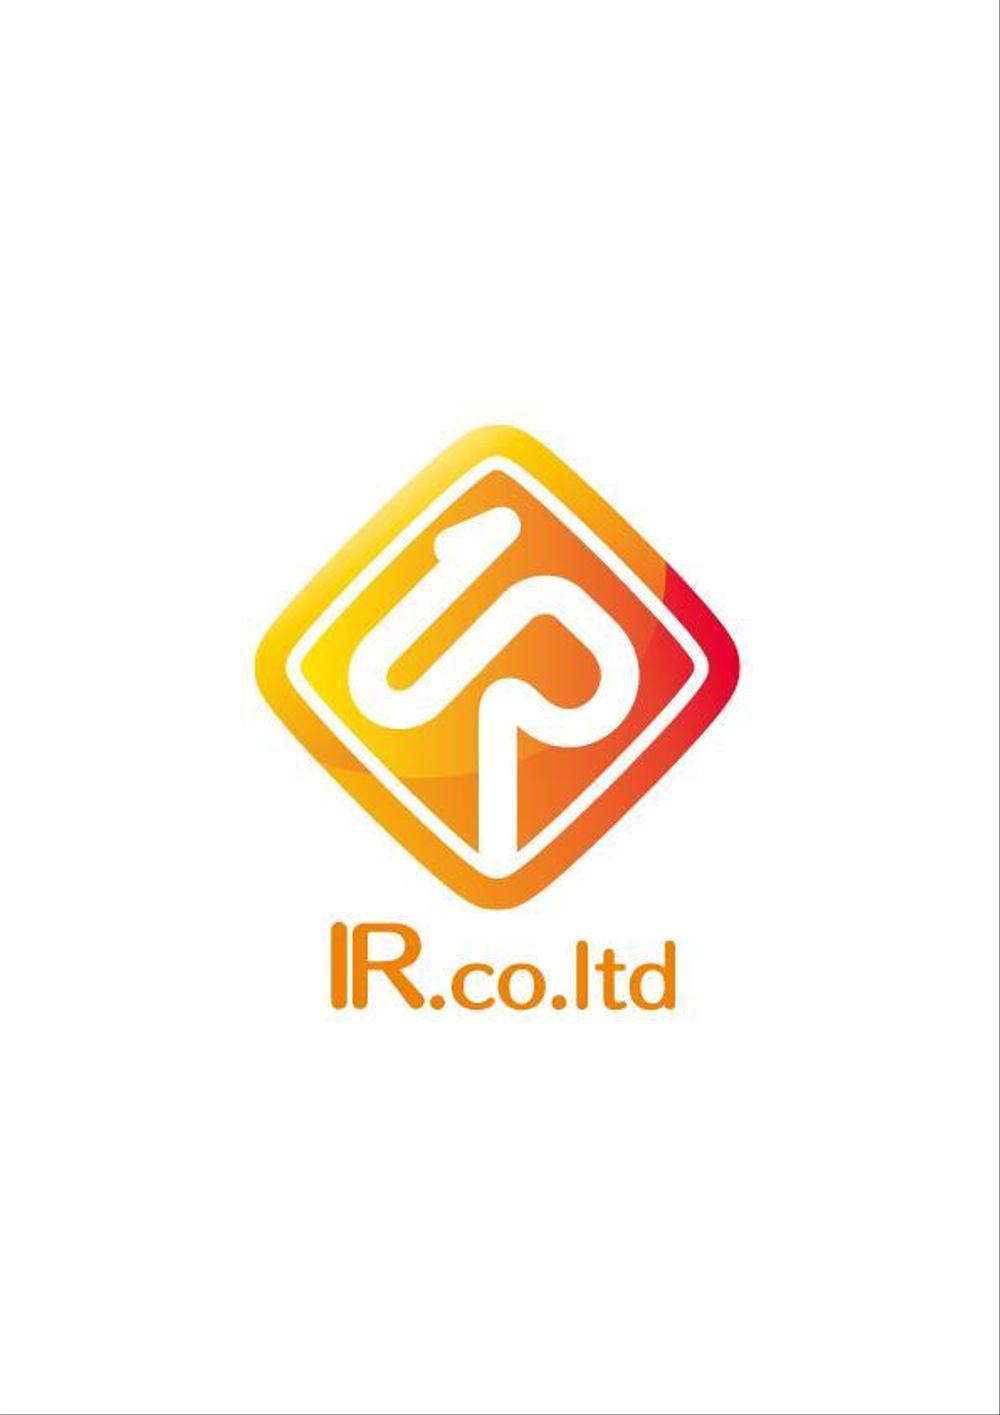 IR_logo_01.jpg